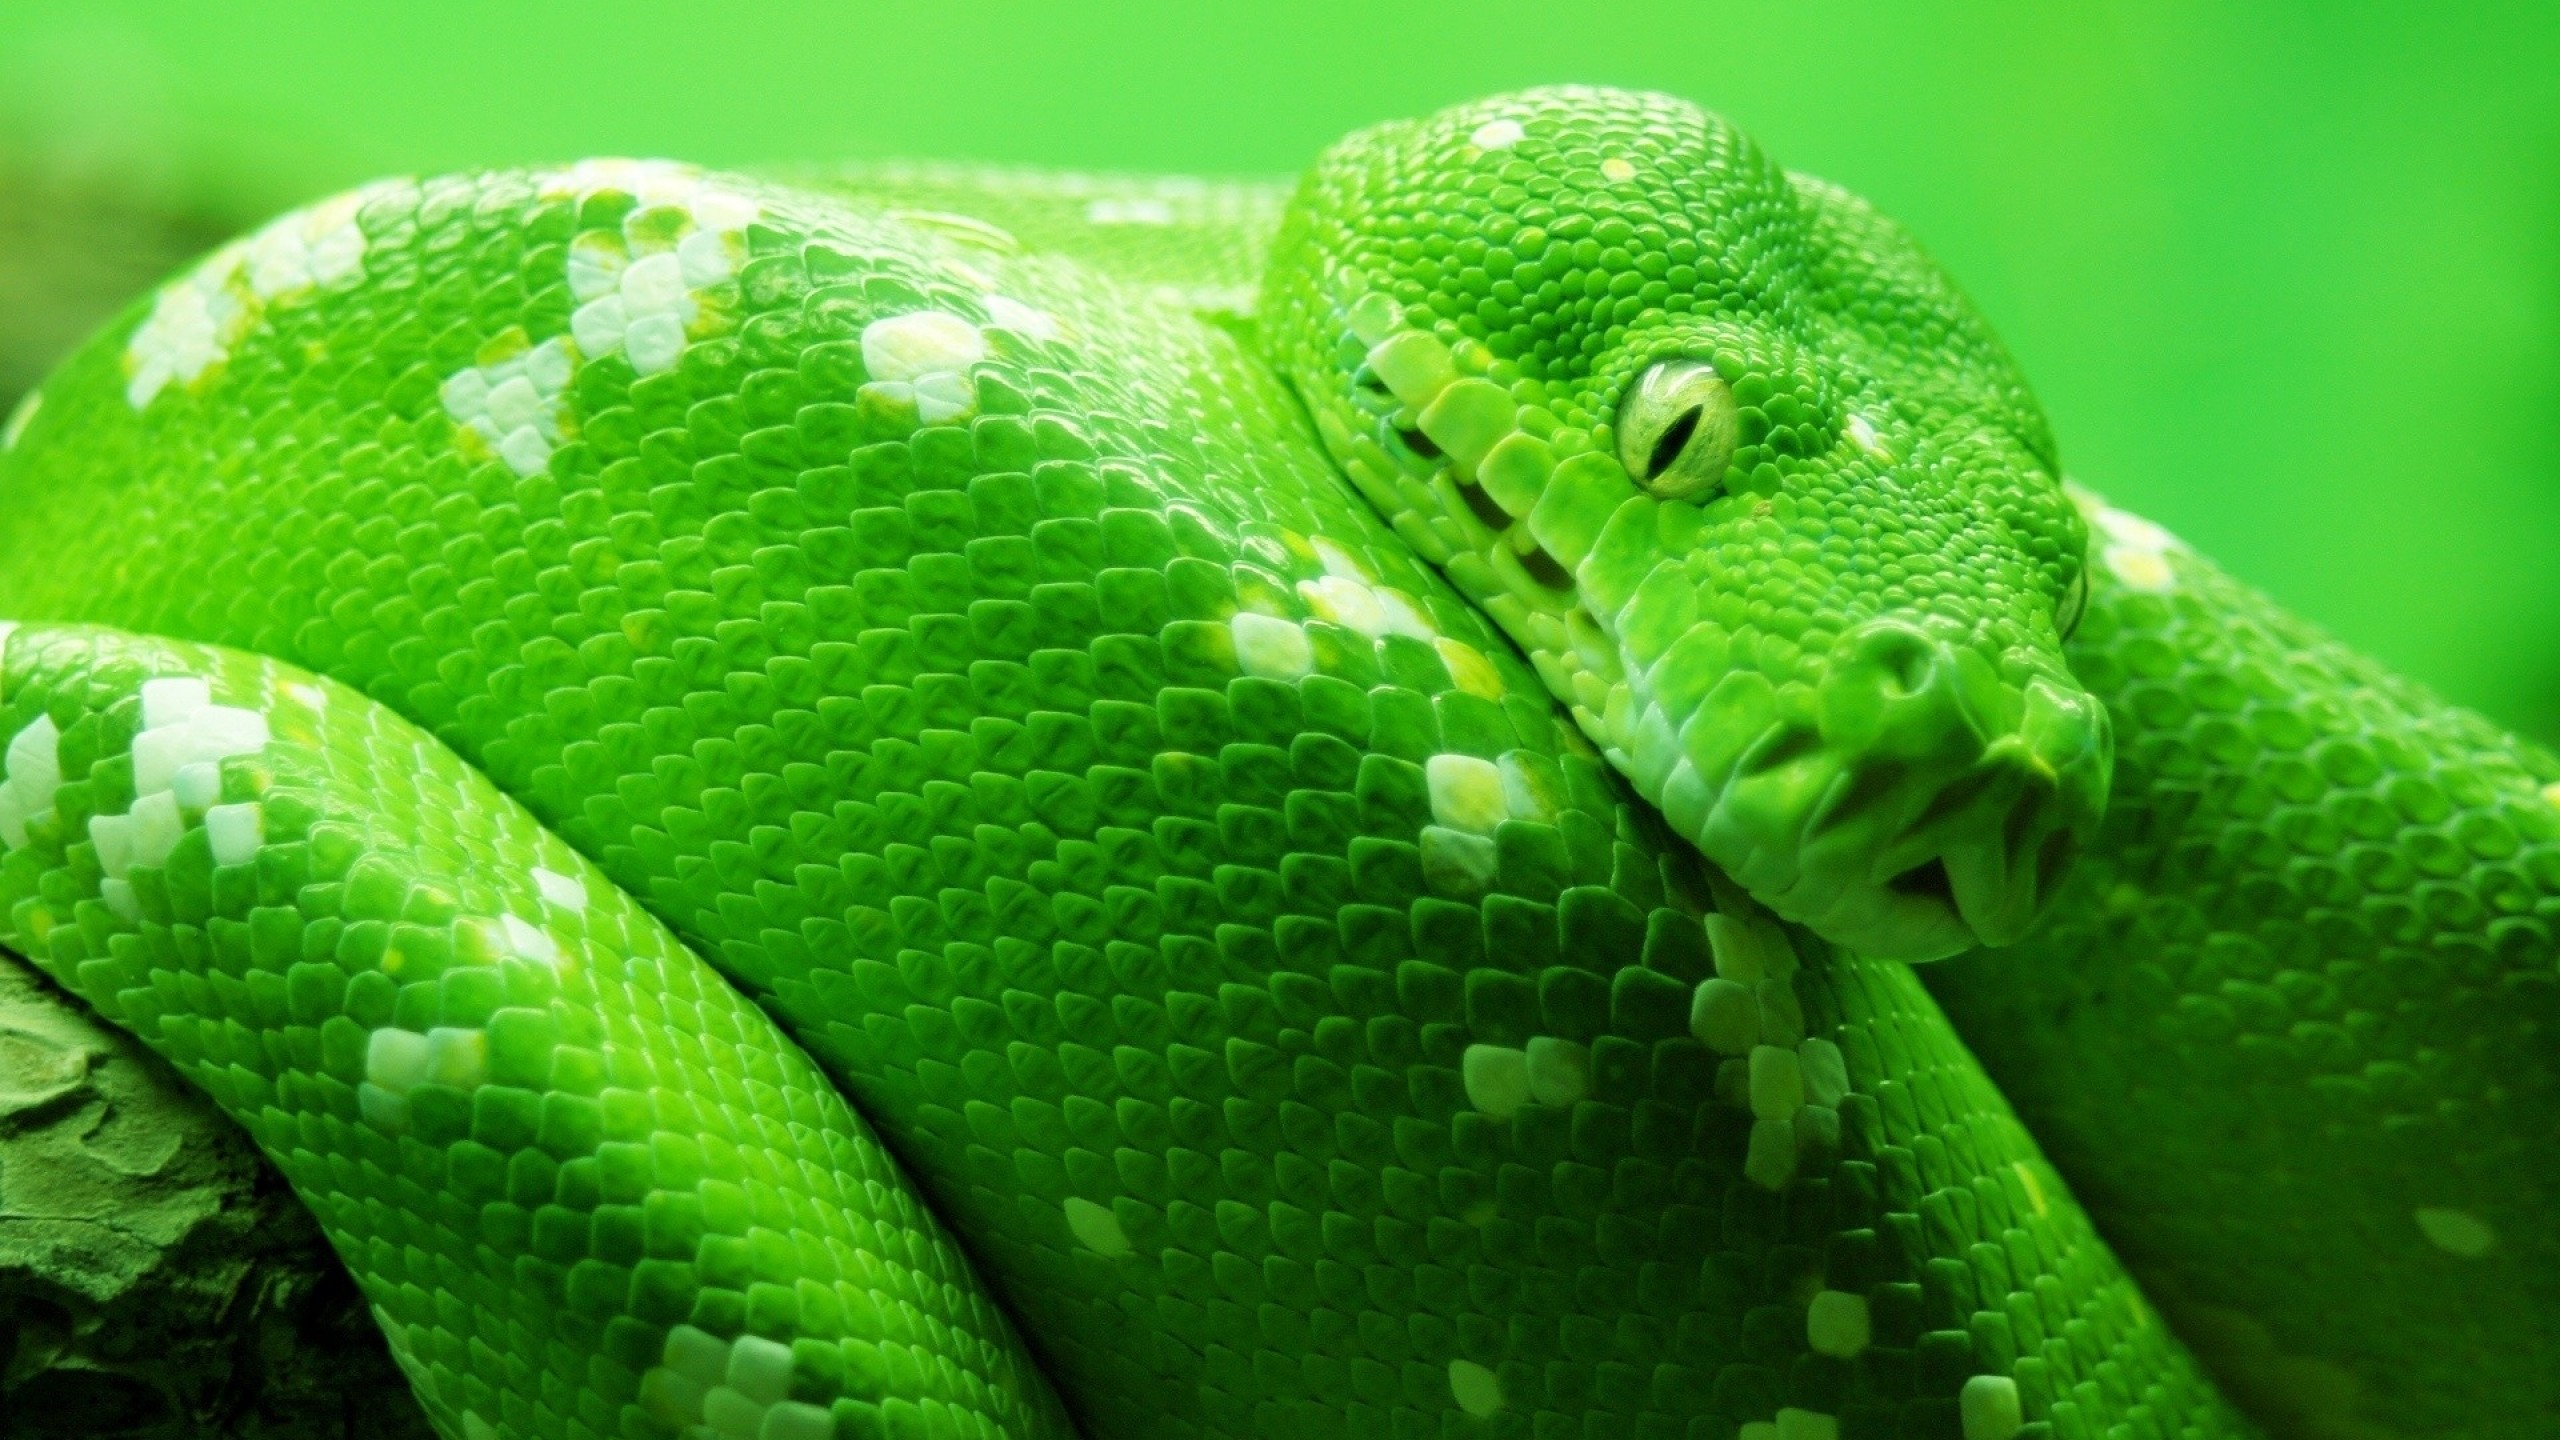 android animal, python, snake, reptiles